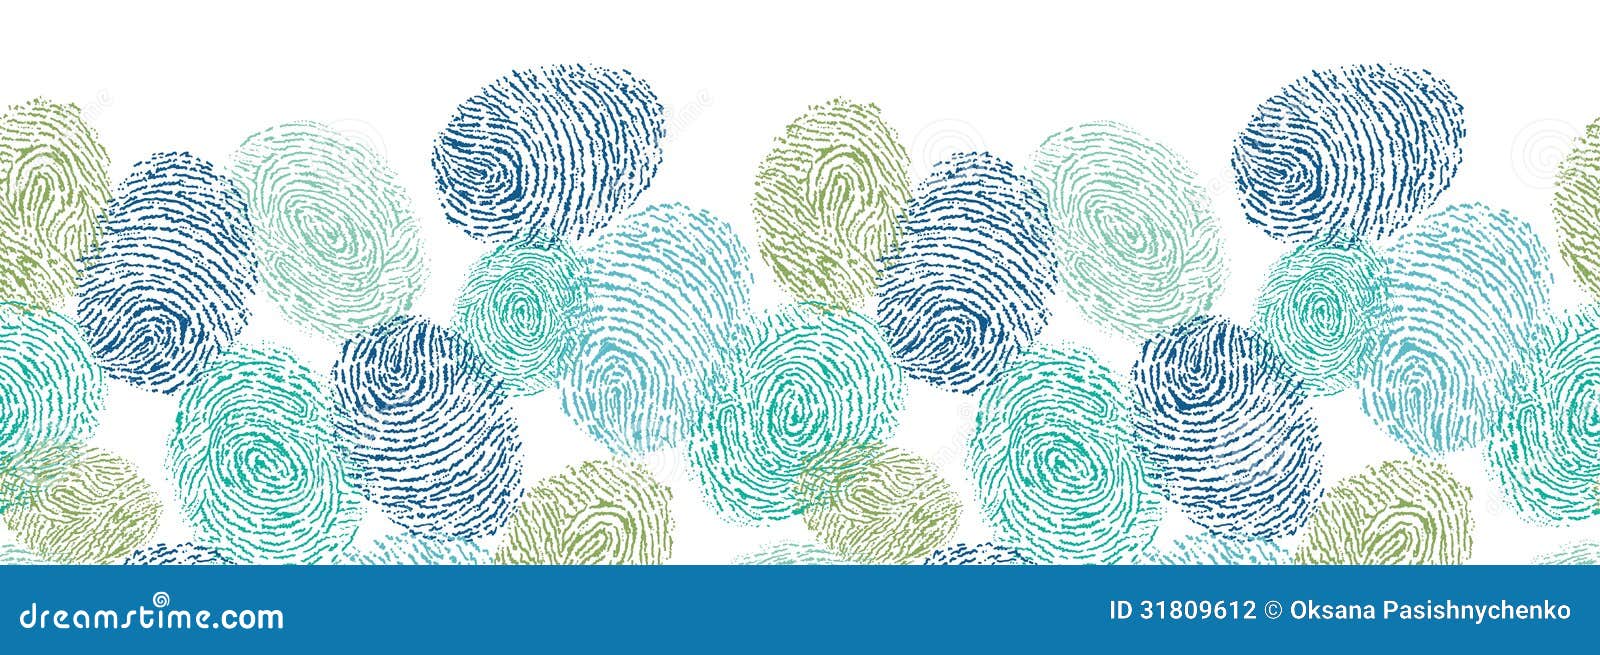 colorful fingerprints horizontal seamless pattern